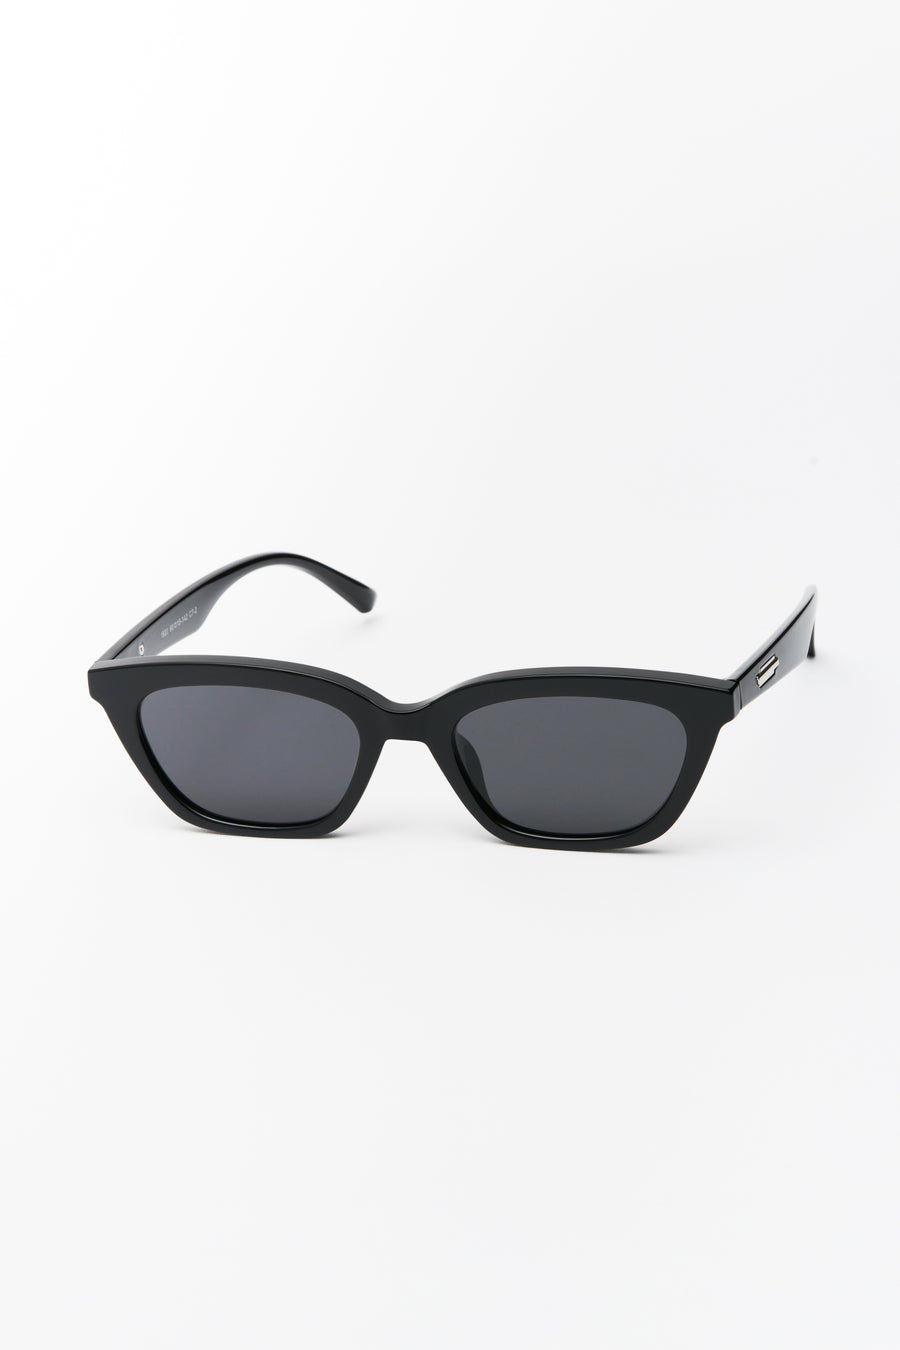 Billy Sunglasses Black/Smoke Lens